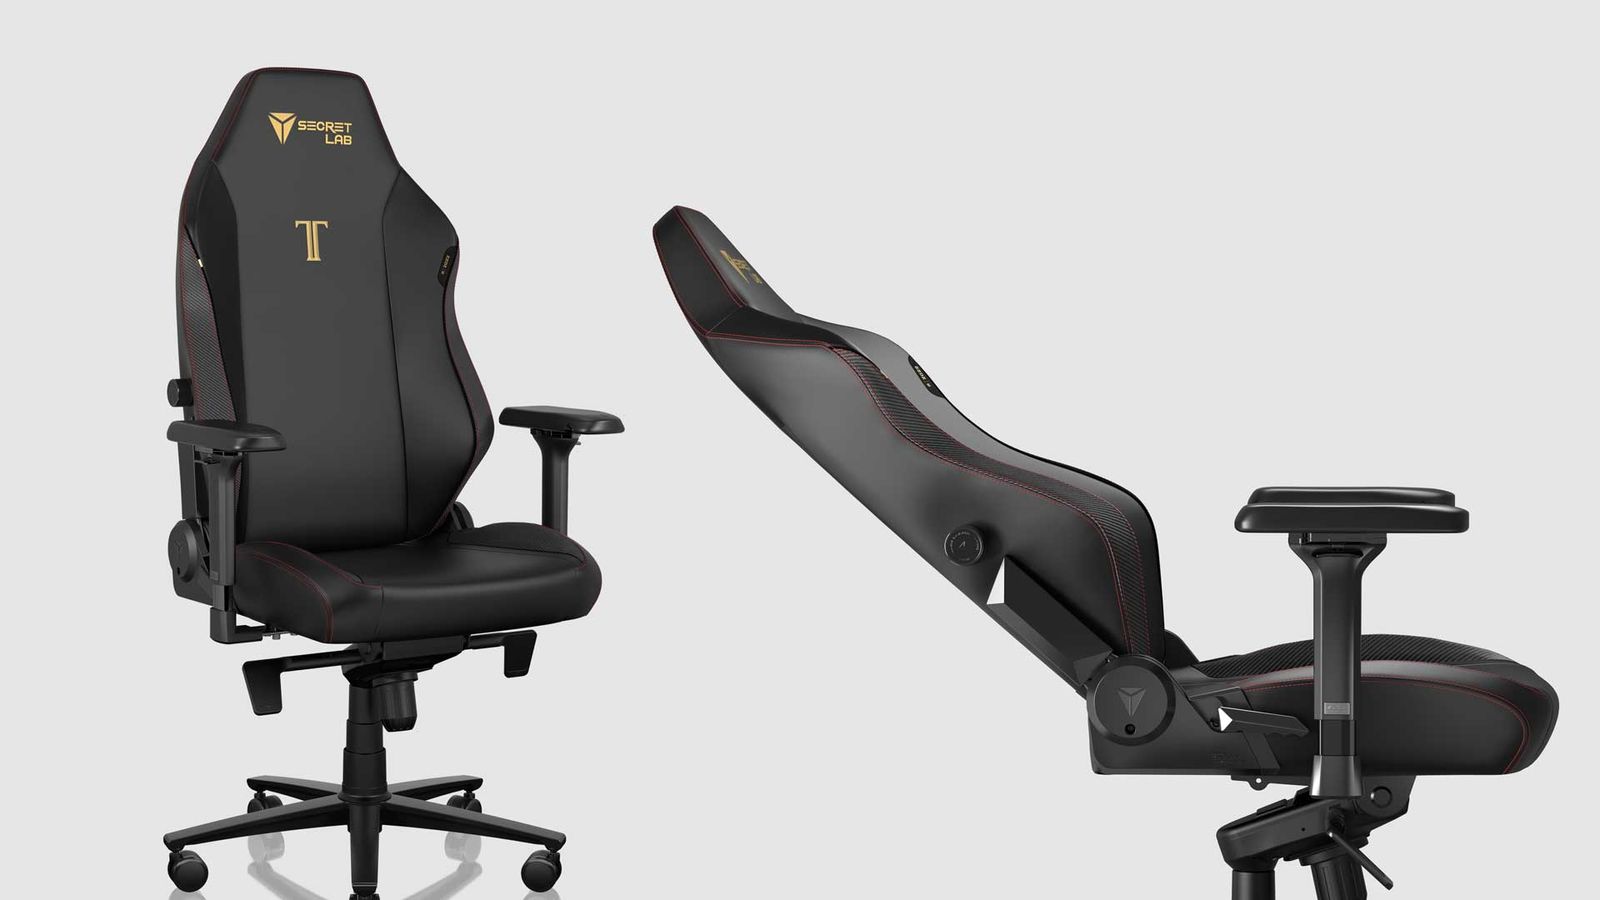 Secretlab Titan Evo 2022 gaming chair review - The pop culture throne